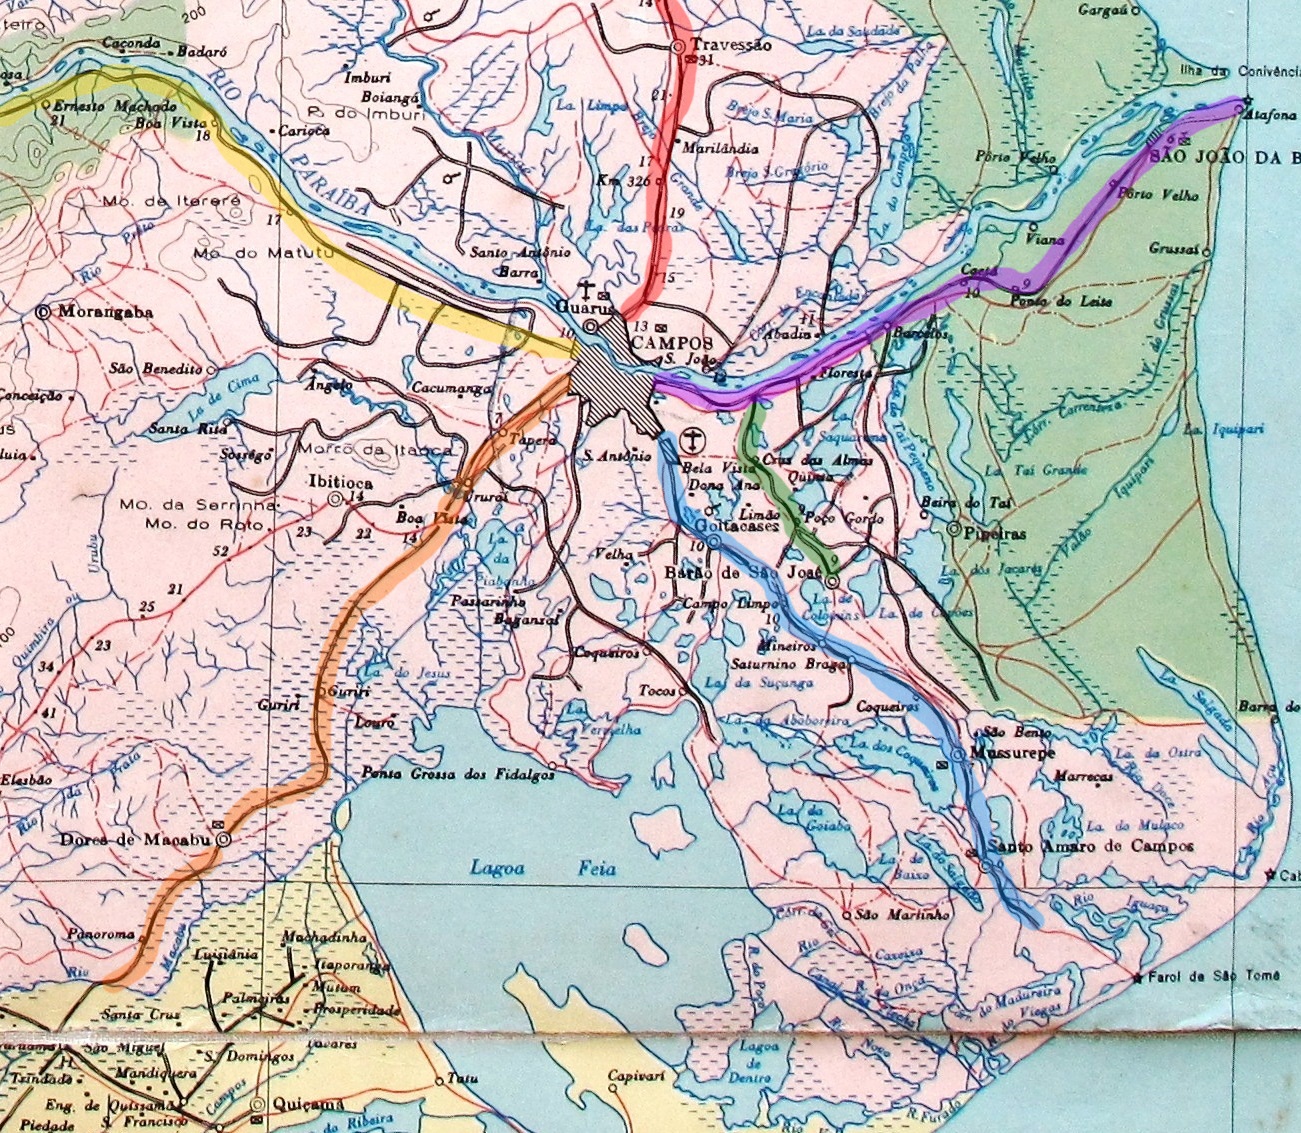 campos-1953-reg-sul-mapa-politico